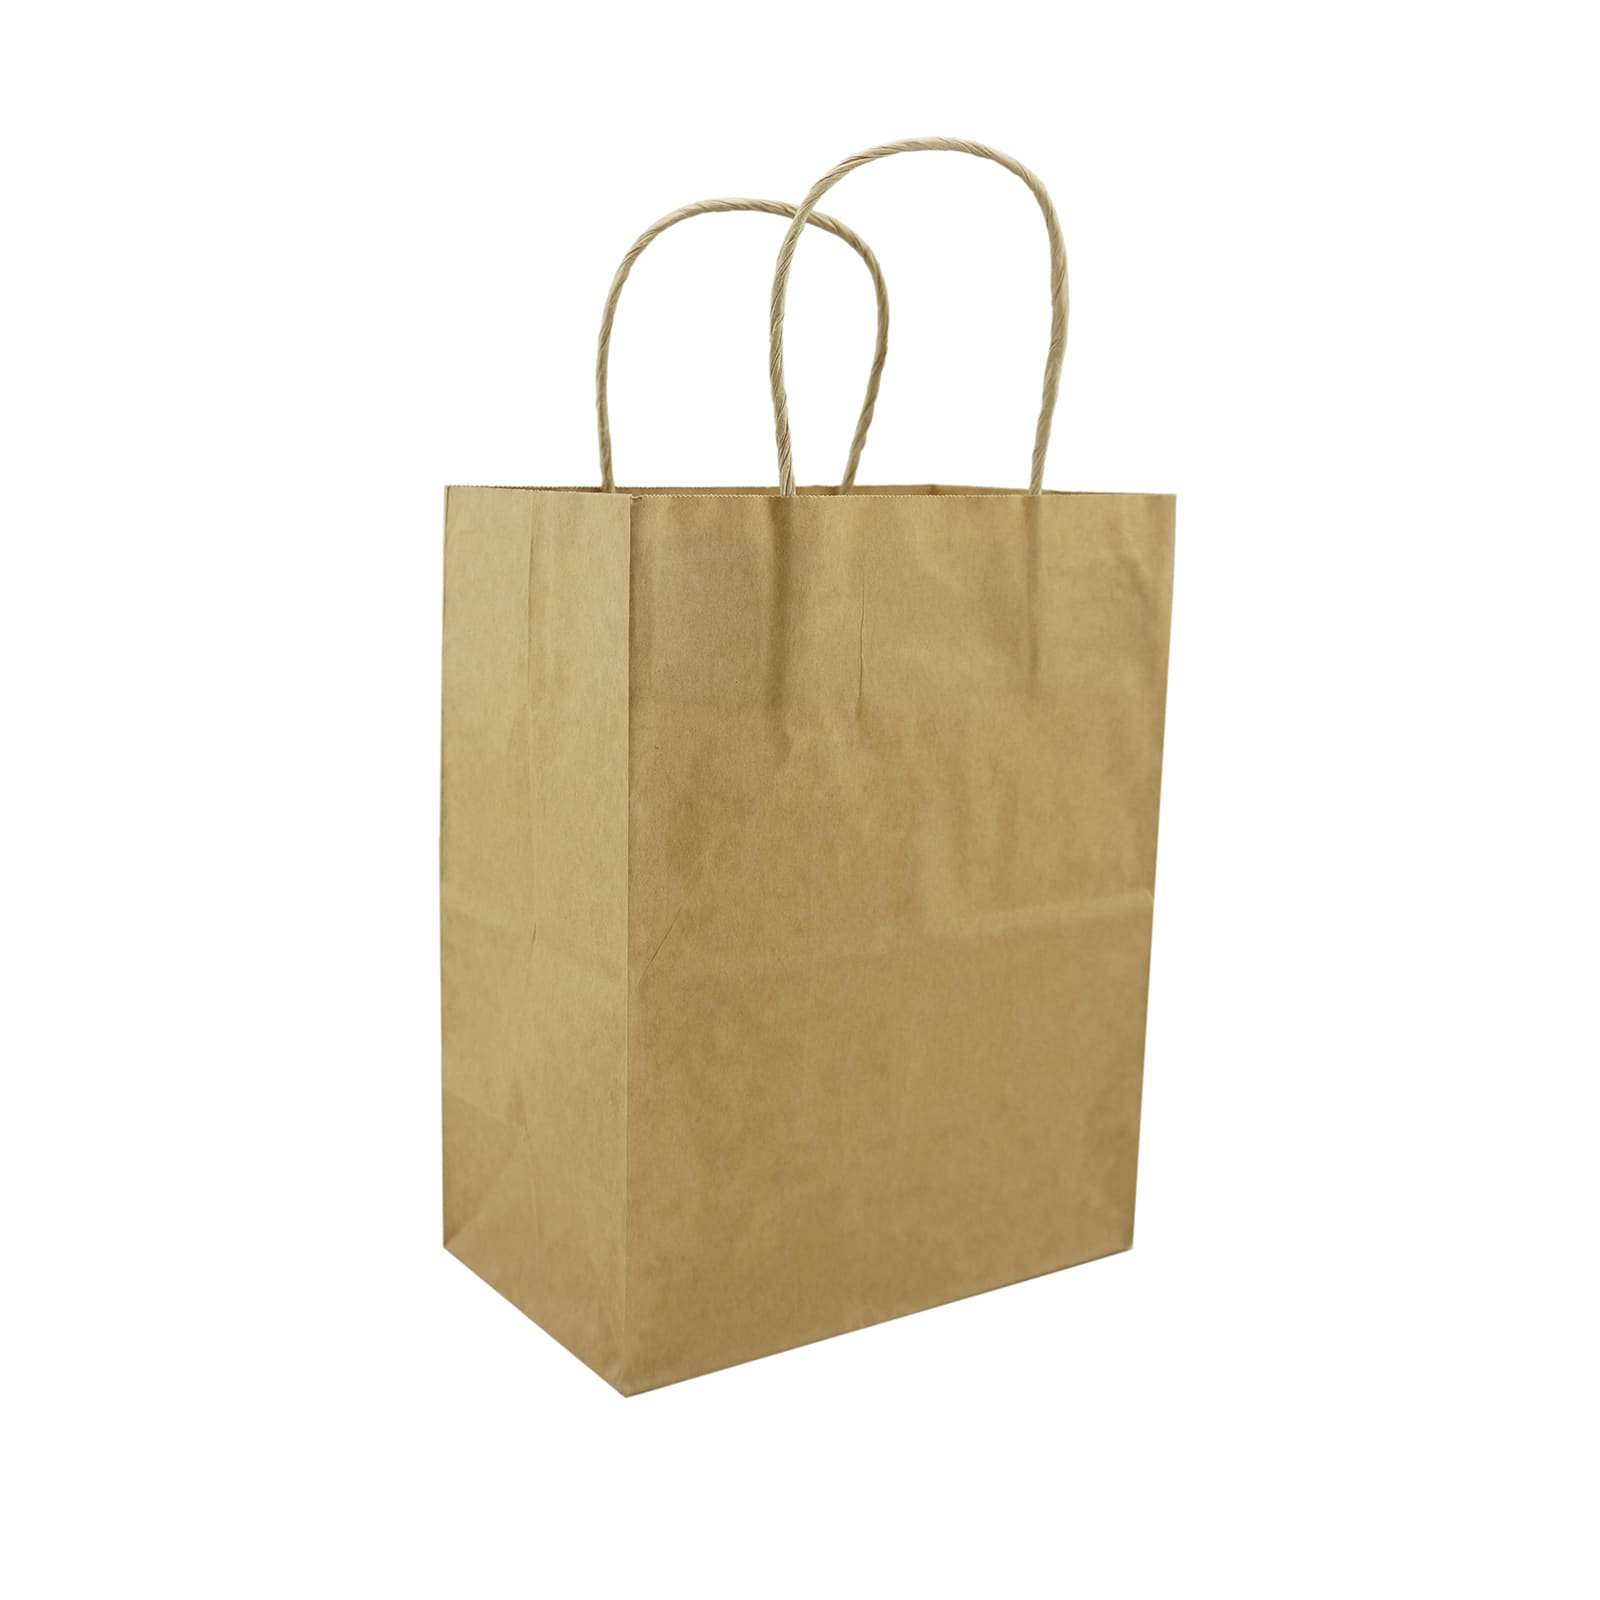 Medium size Bag